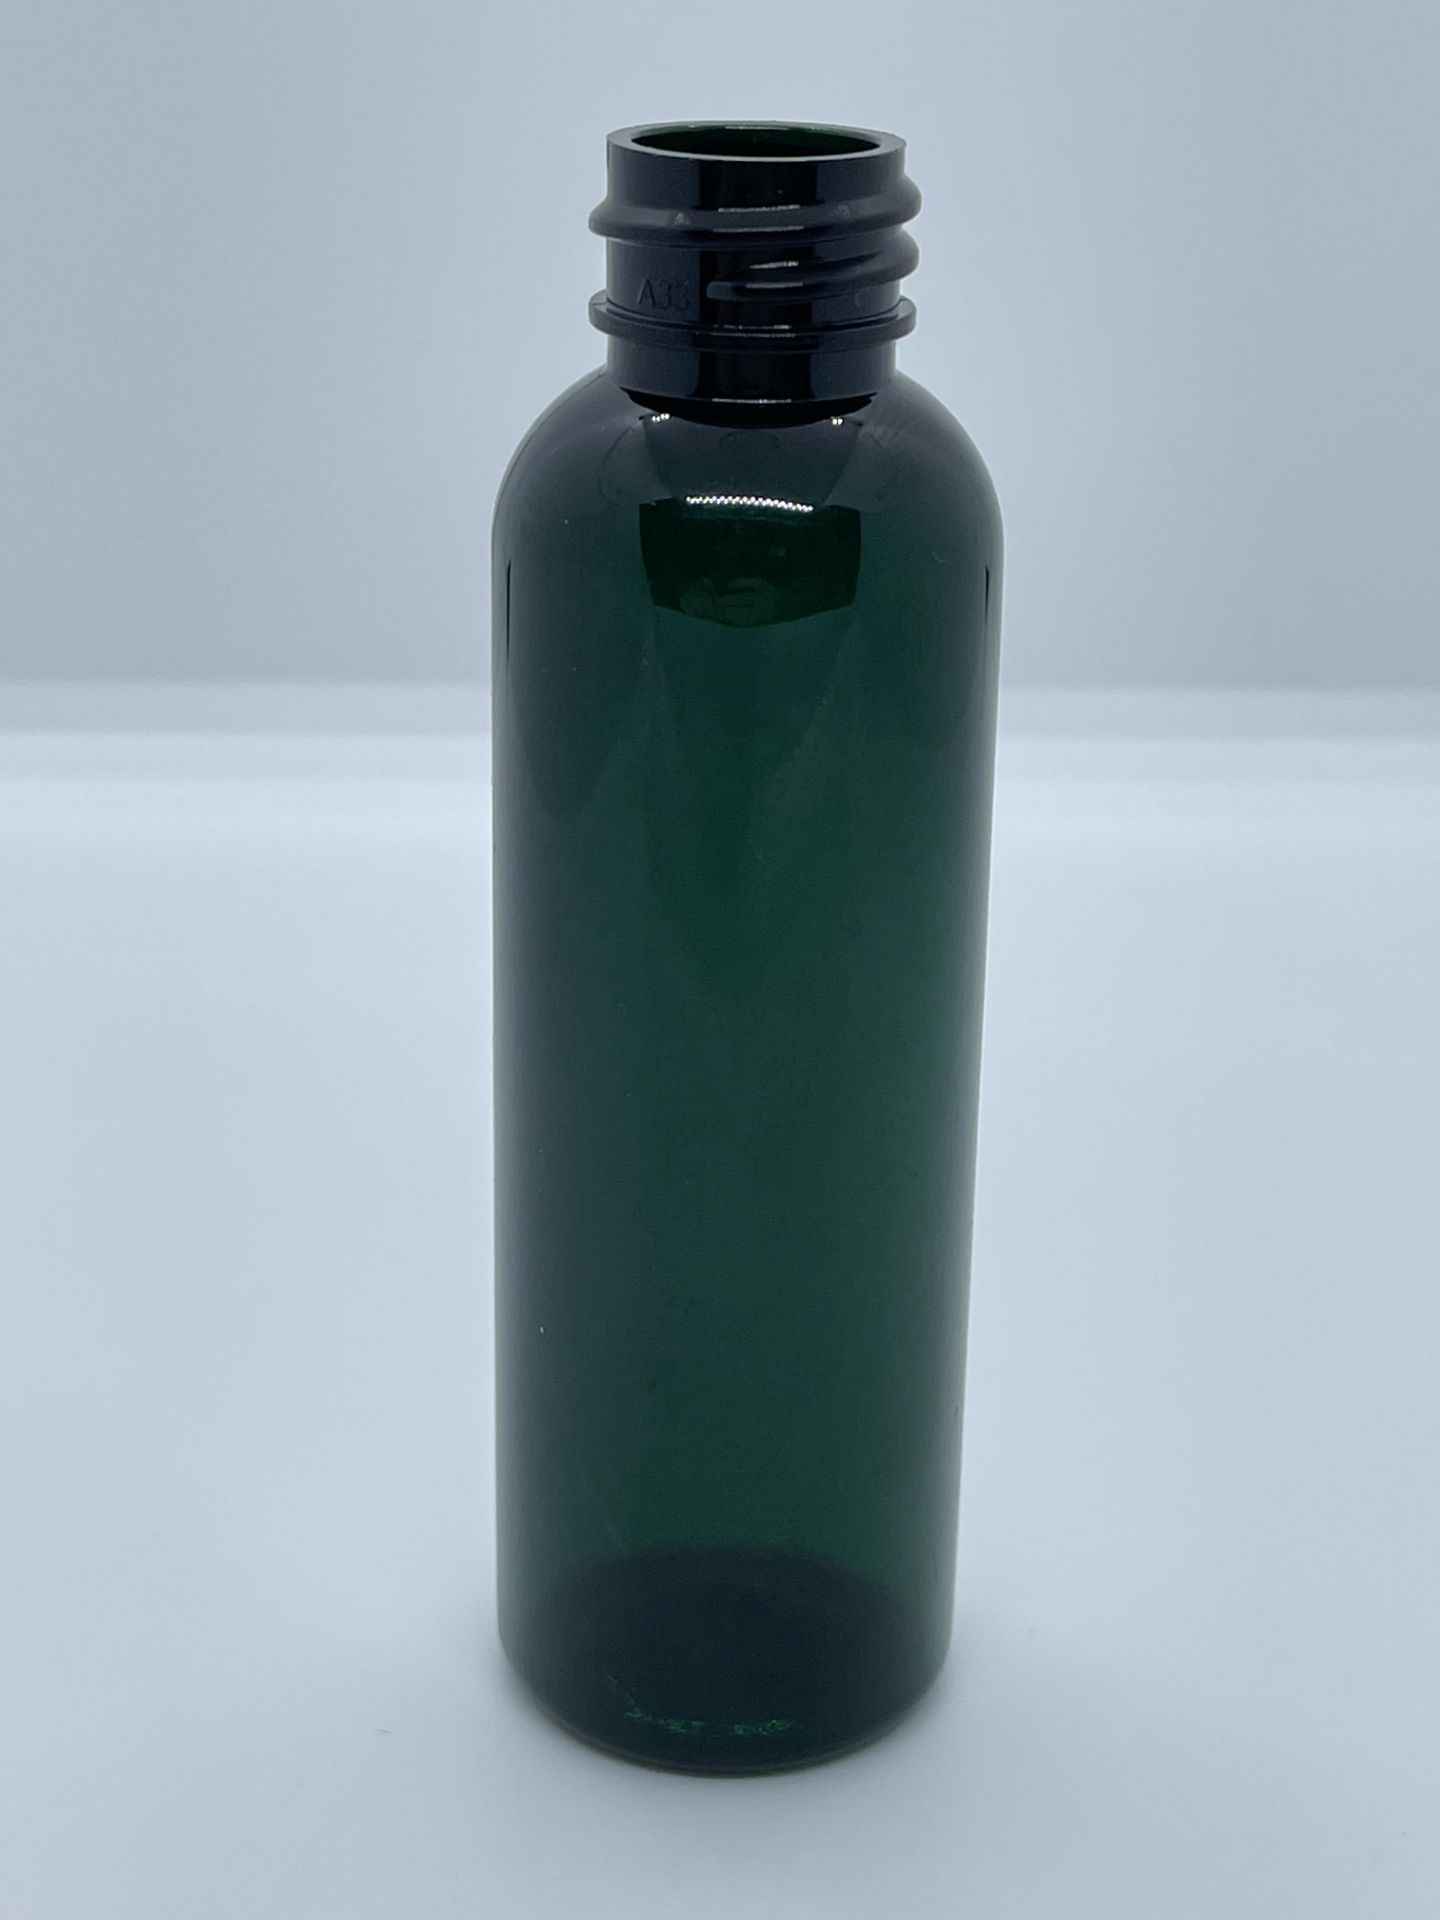 29,000 - Green Alpha Plastic 2 oz Empty Bottles, 20-410 Threading Neck, 4 1/8" Tall, 1.25" Diameter